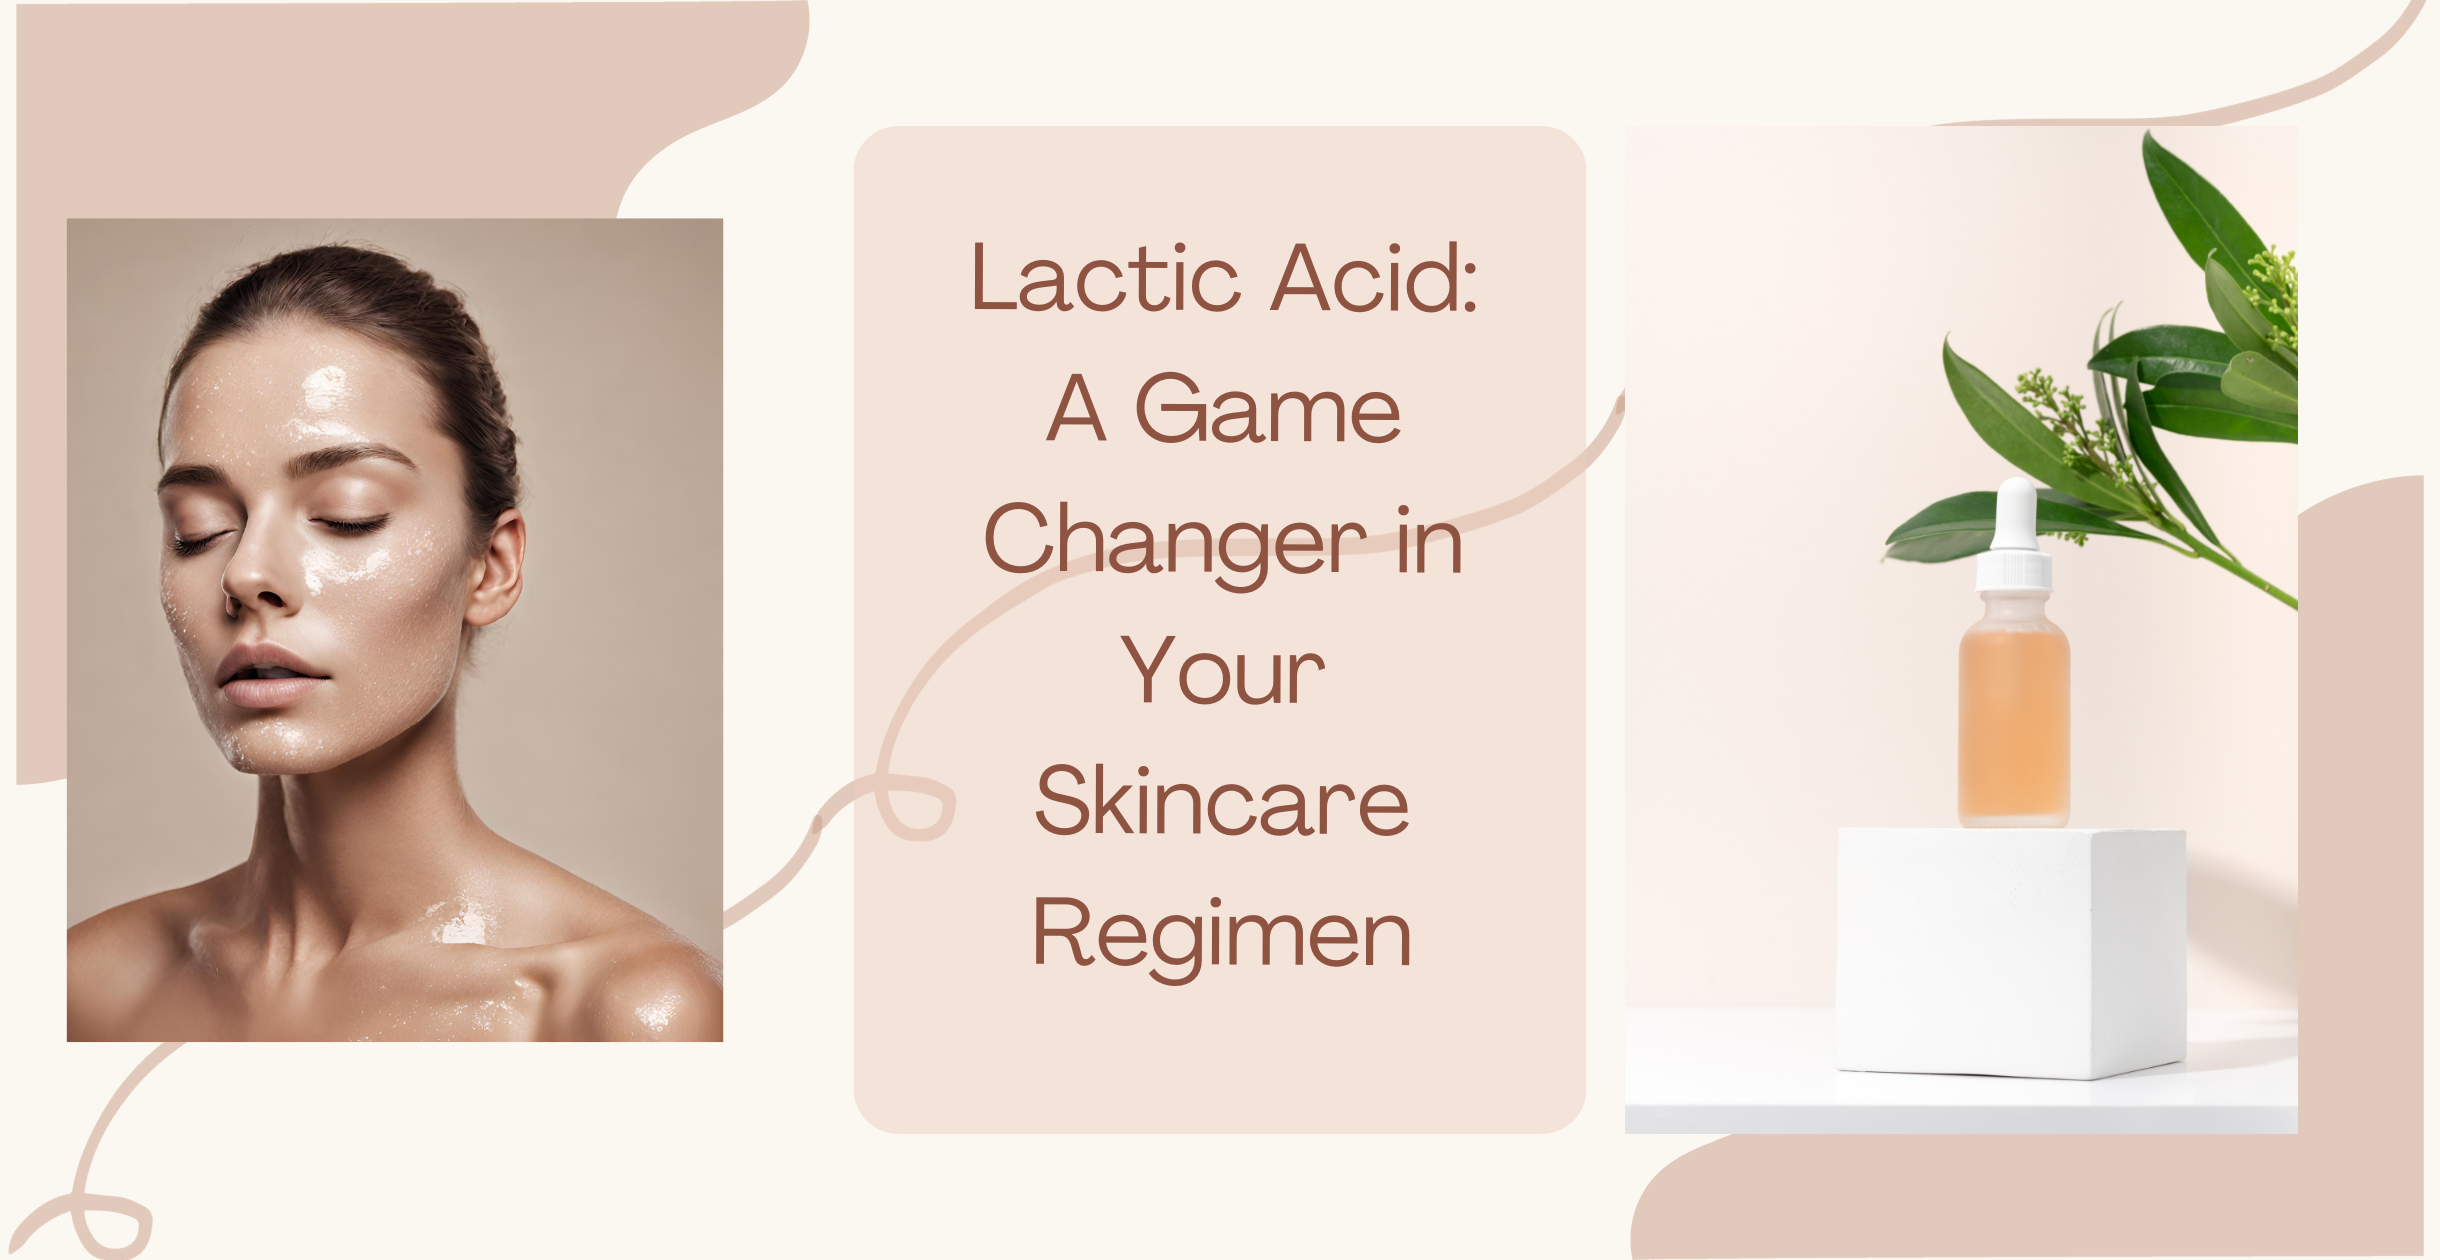 Lactic Acid: A Game Changer in Your Skincare Regimen